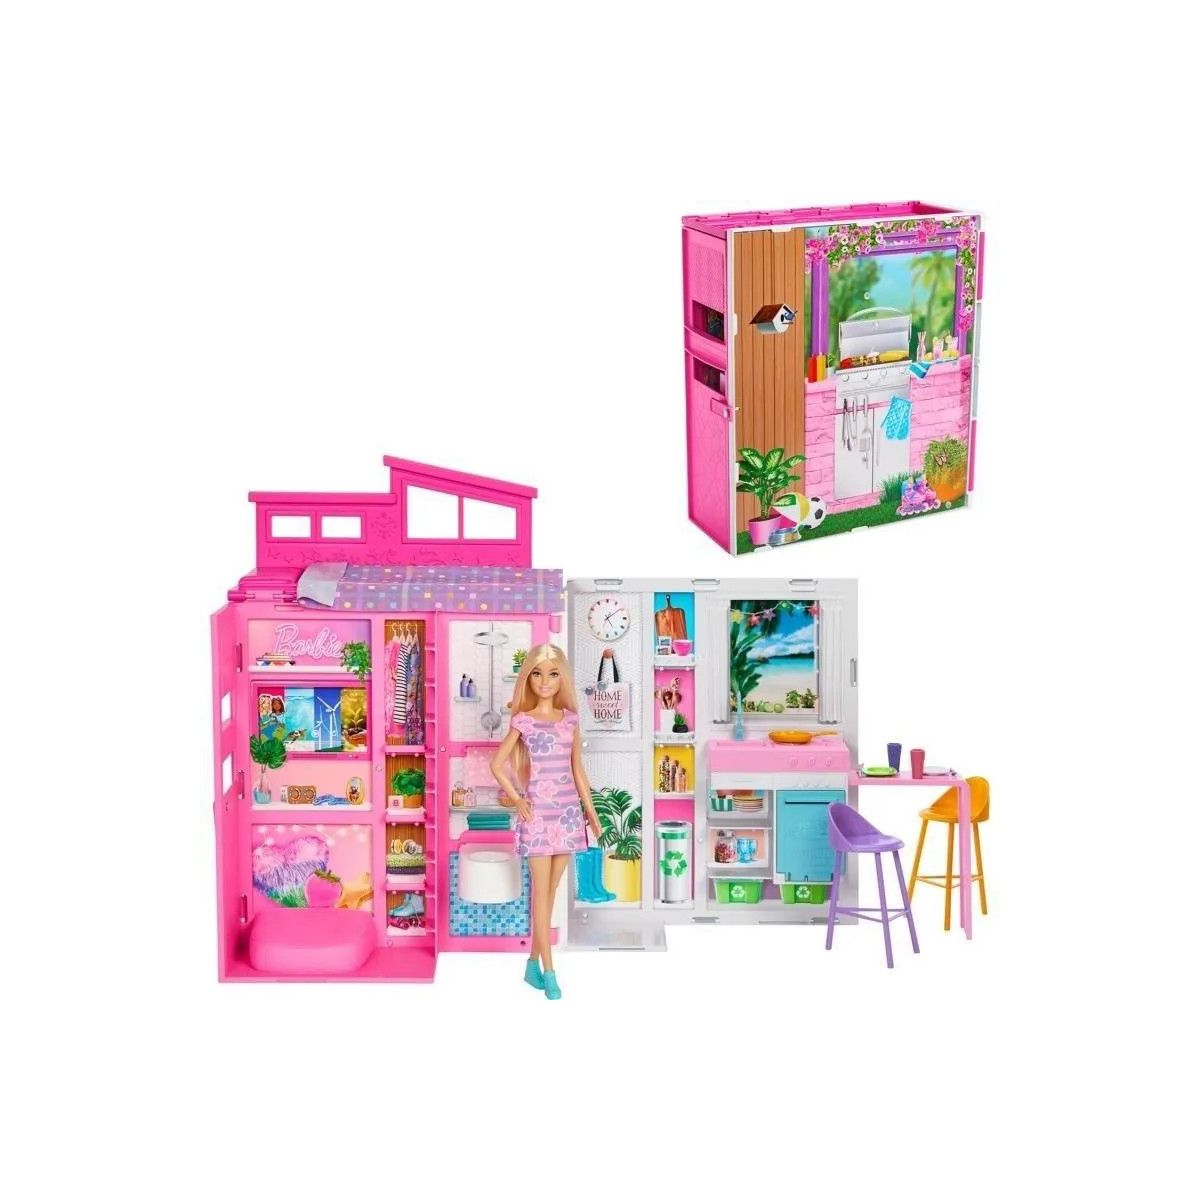 Domek dla lalek Fashionistas rzytulny domek + Lalka Barbie (HRJ77)